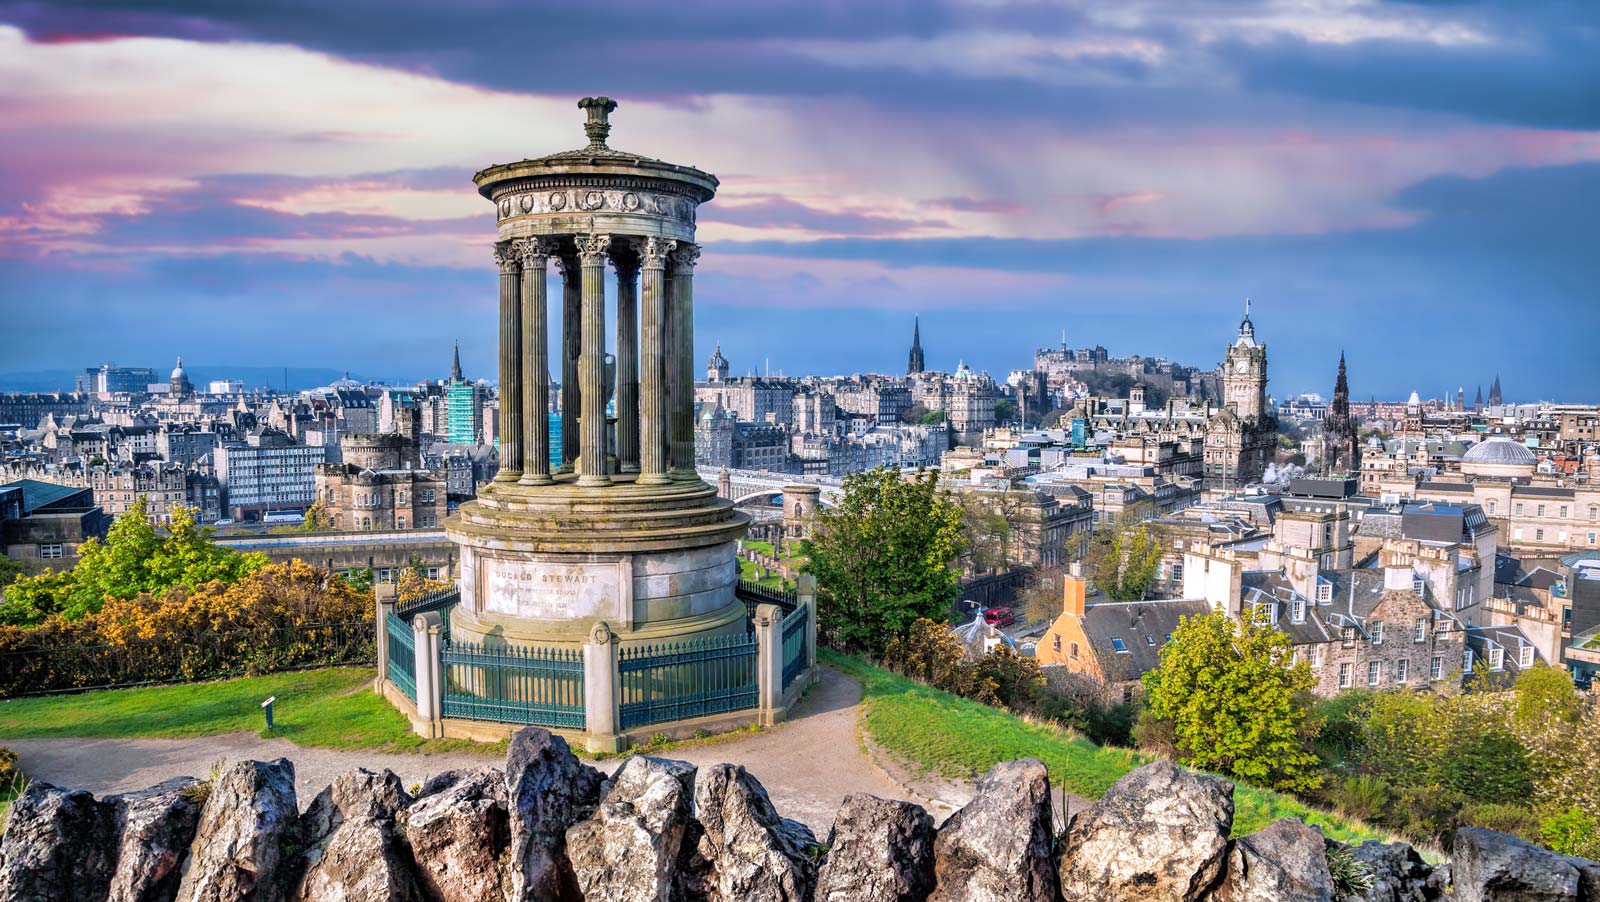 25 Best Things To Do in Edinburgh, Scotland